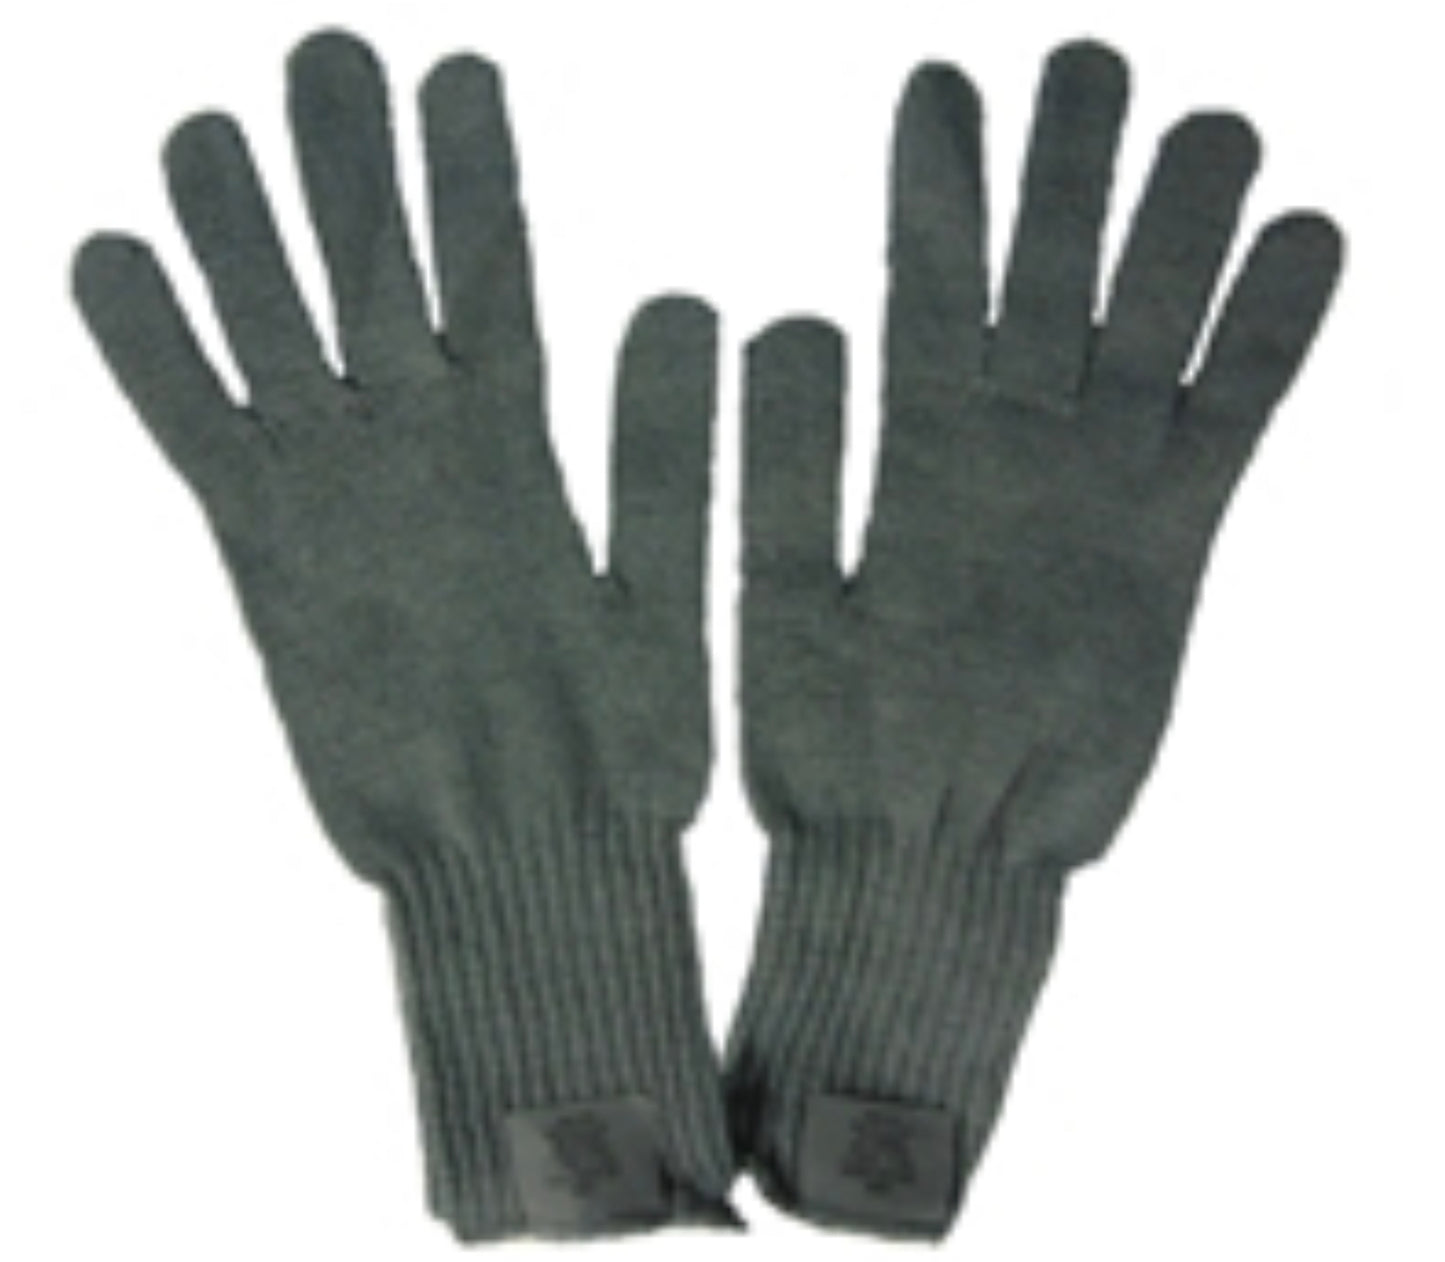 Wool Cold Weather Glove Insert Type II